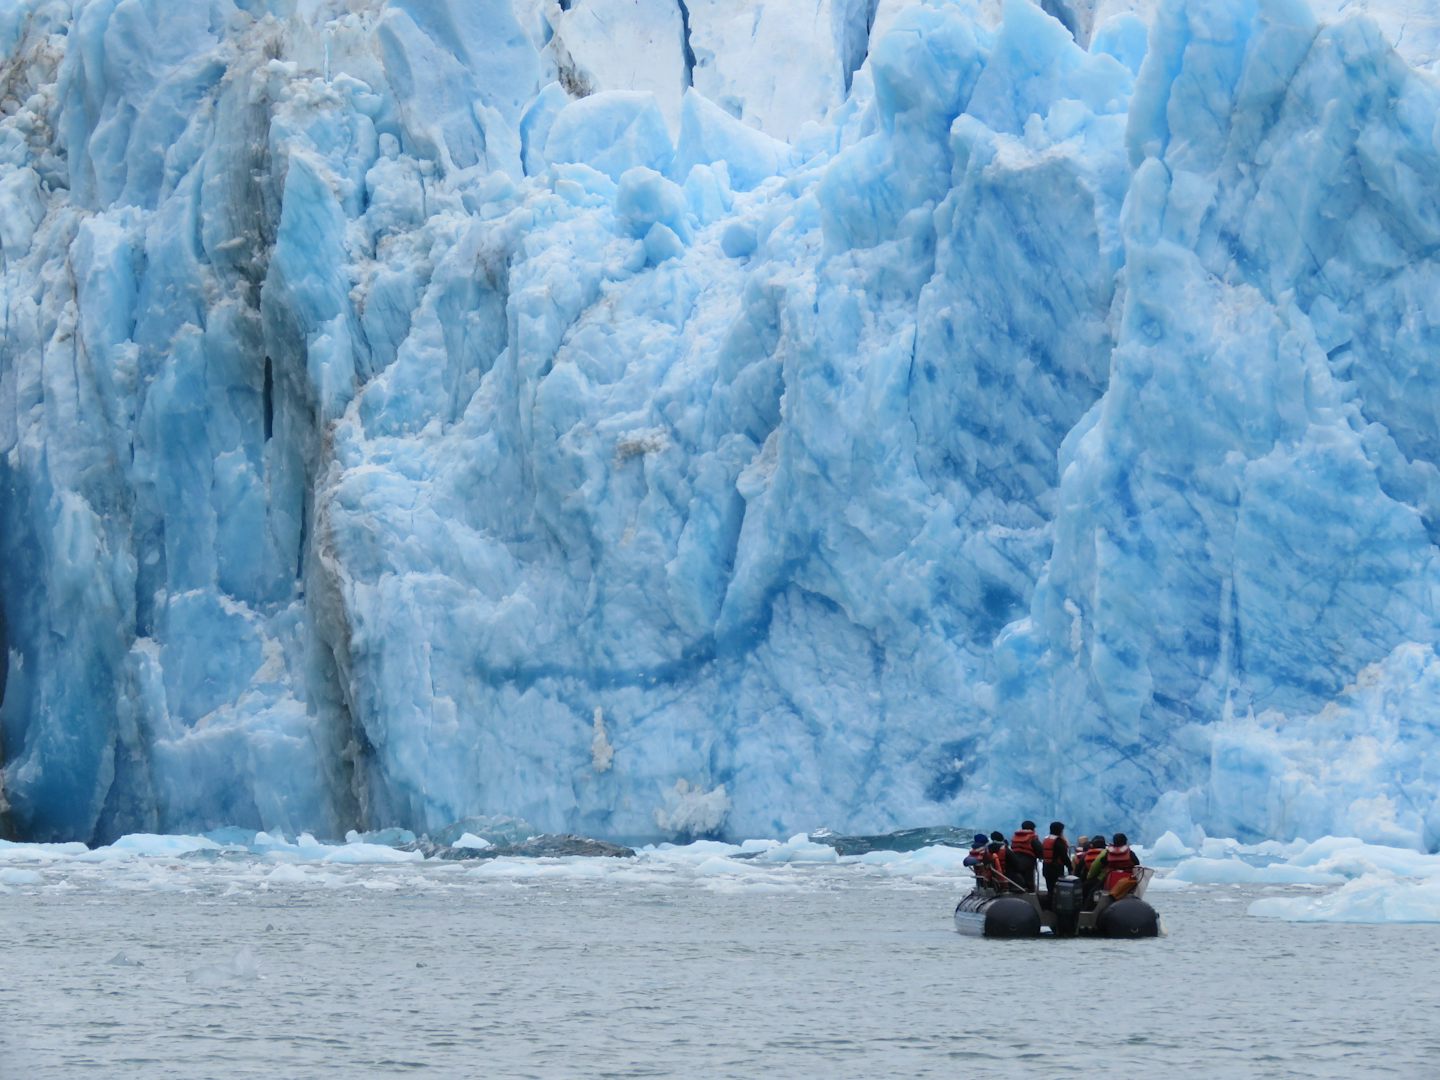 Riding a zodiac boat up to a glacier in Glacier Bay